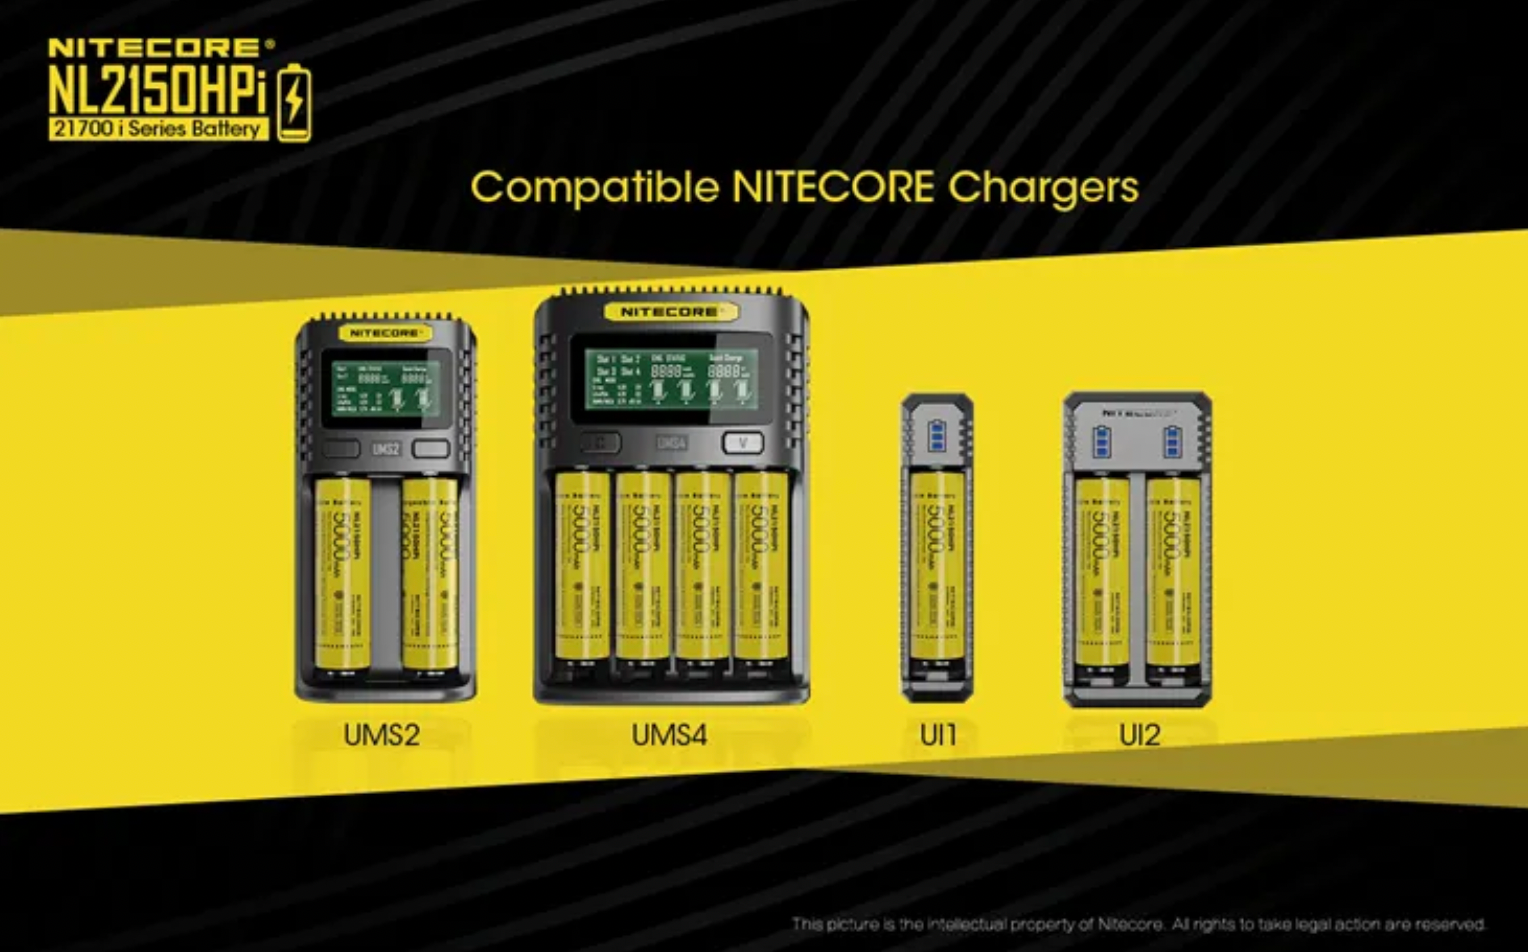 Nitecore 21700 Li-ion 15A Battery 5000mAh NL2150HPi - RPI Supplies